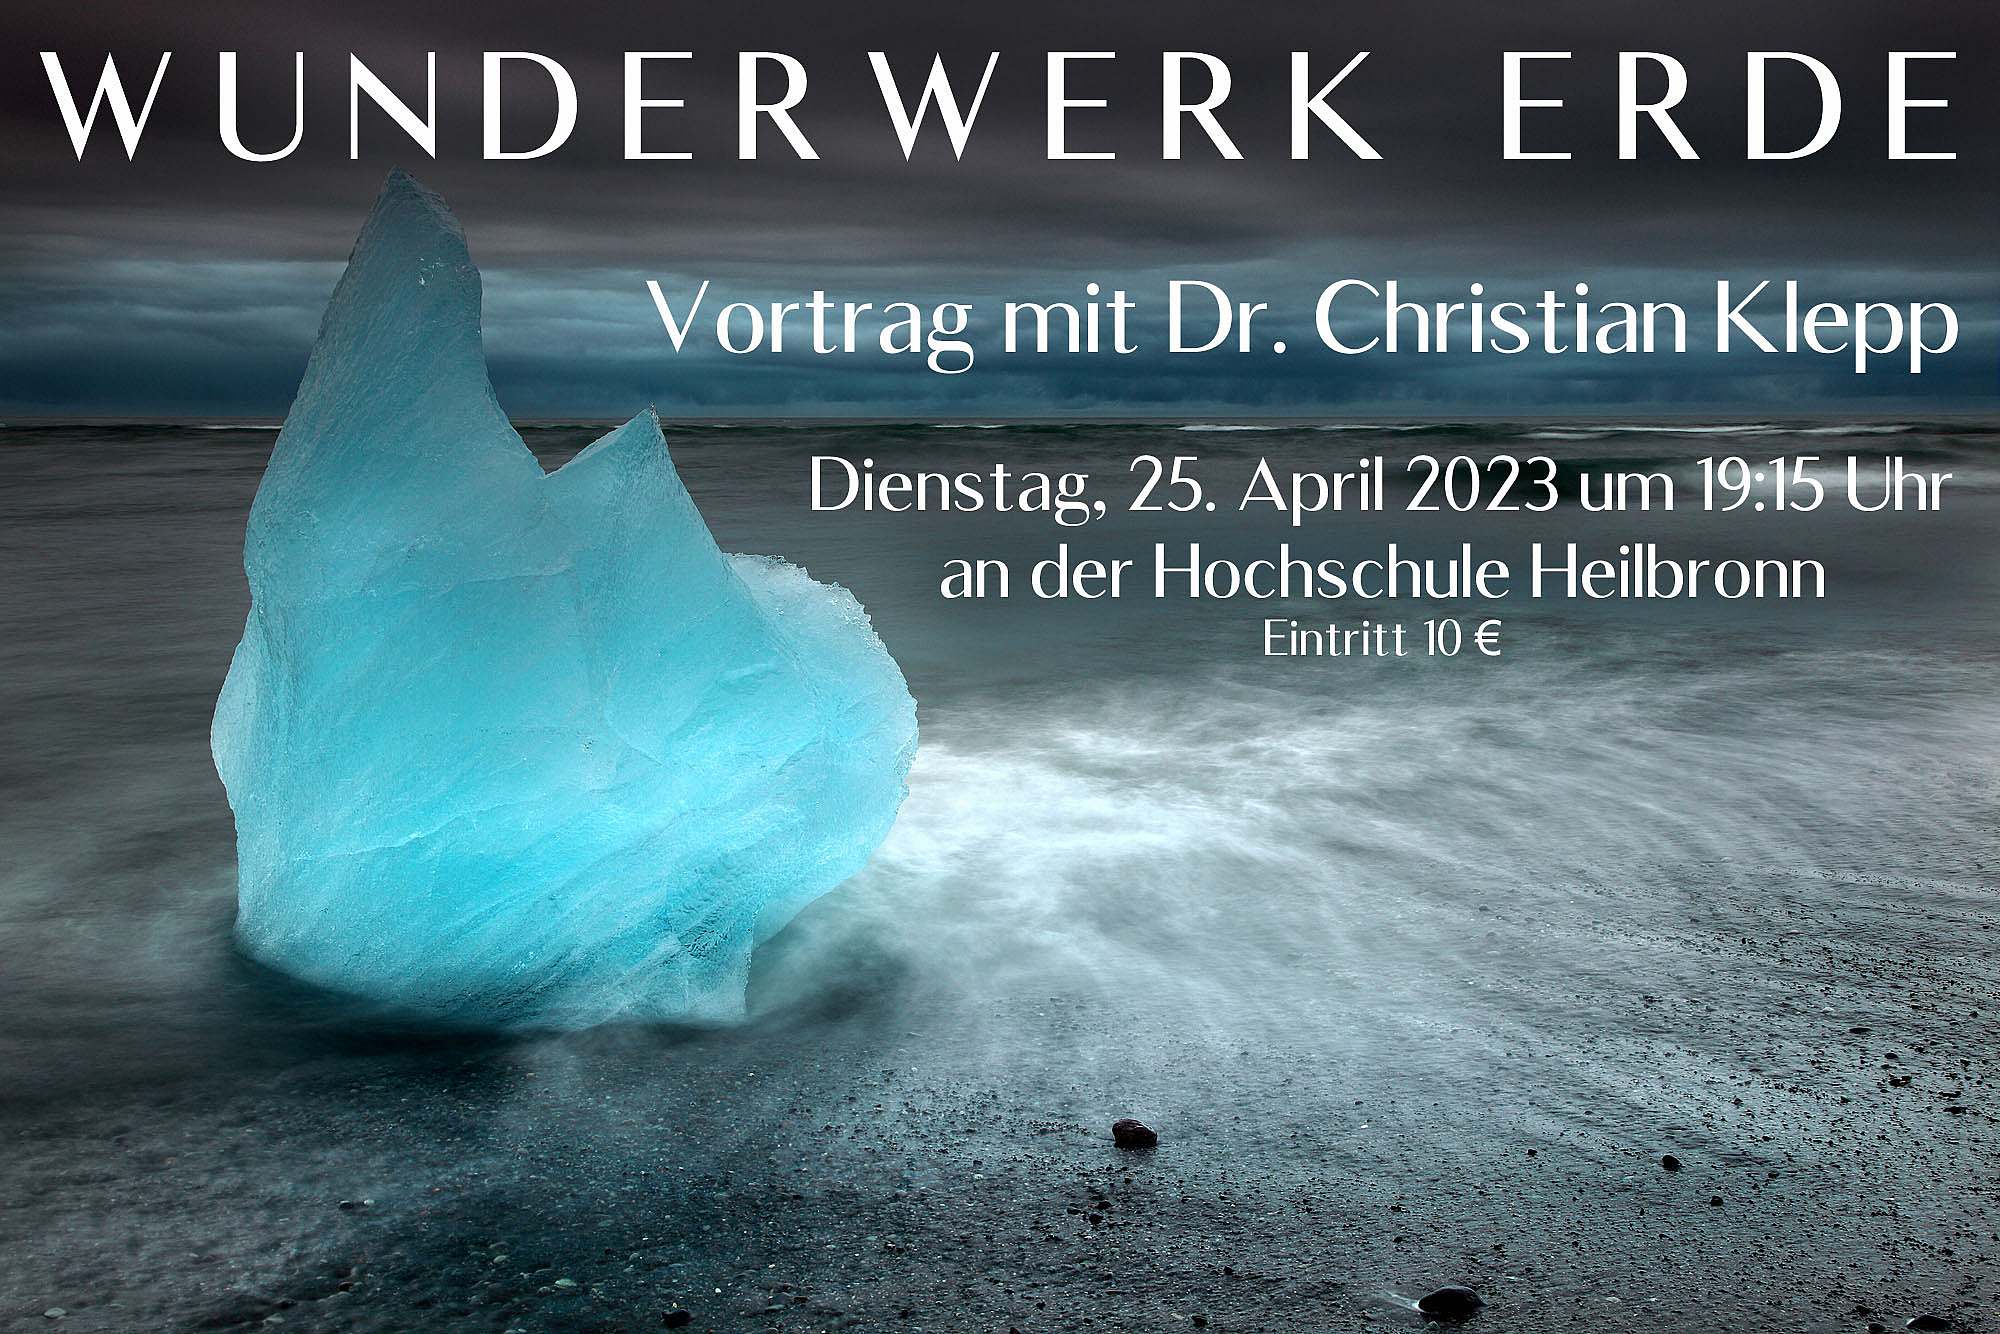 Lecture Wonderwork Earth at University Heilbronn